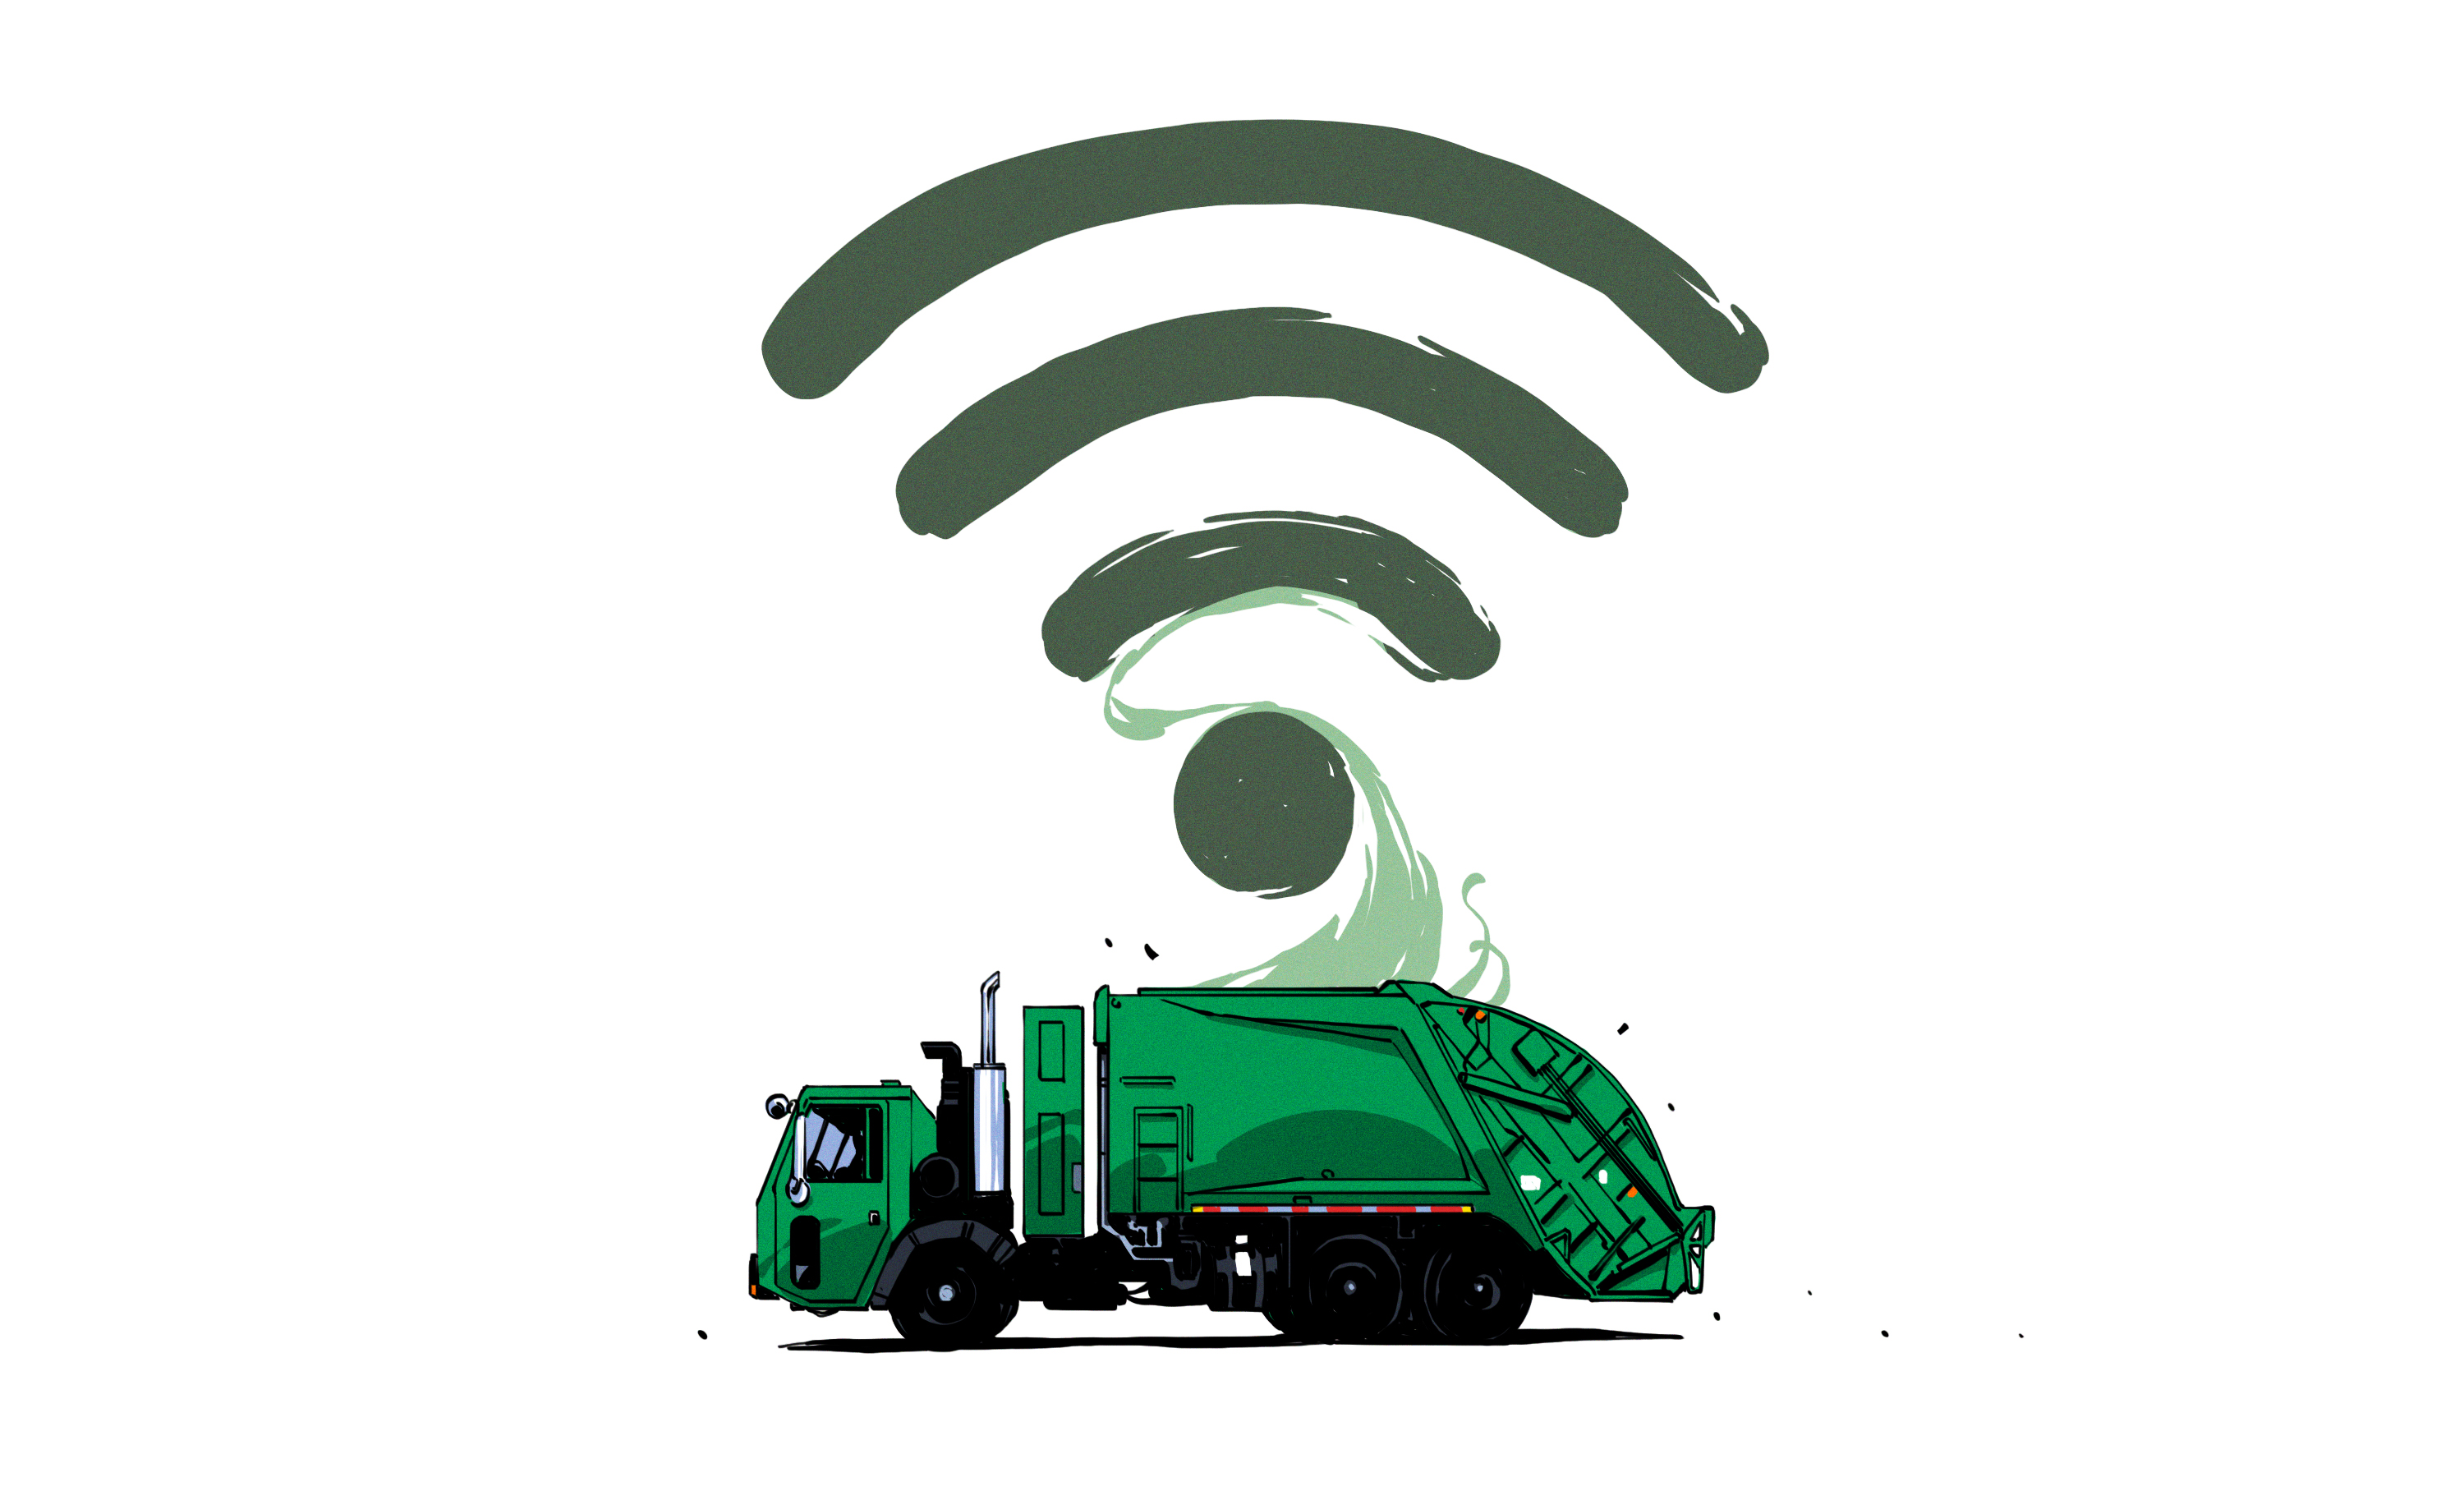 Smart Garbage Trucks Help With Street Maintenance